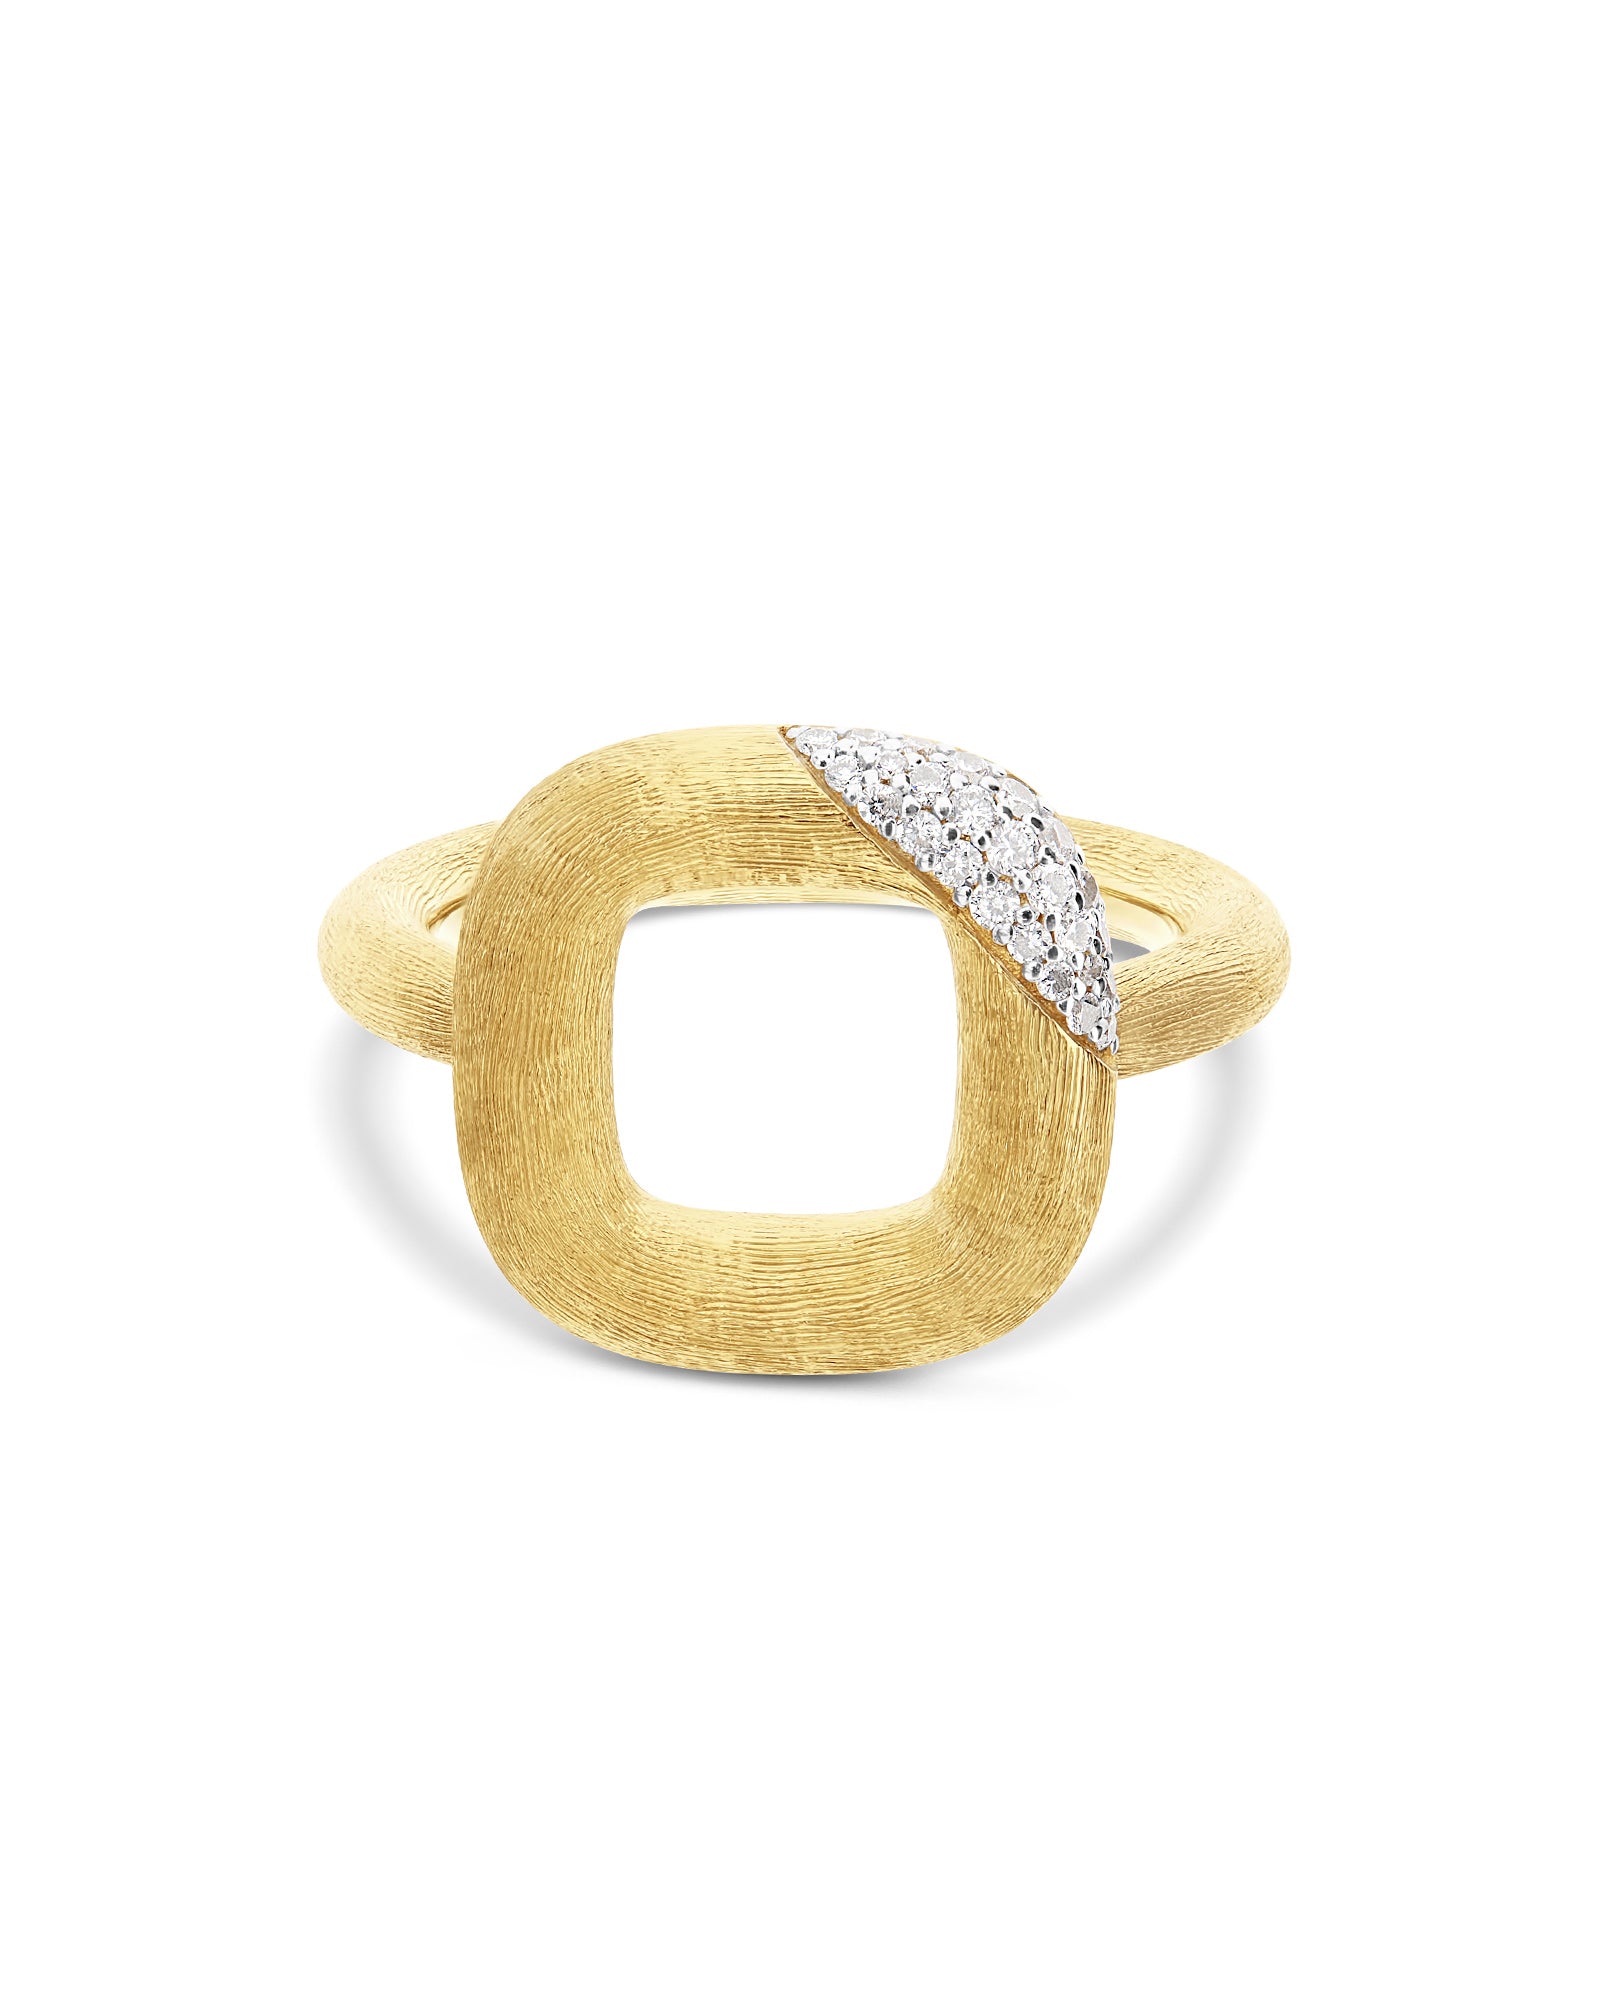 "Libera" small squared gold and diamonds ring